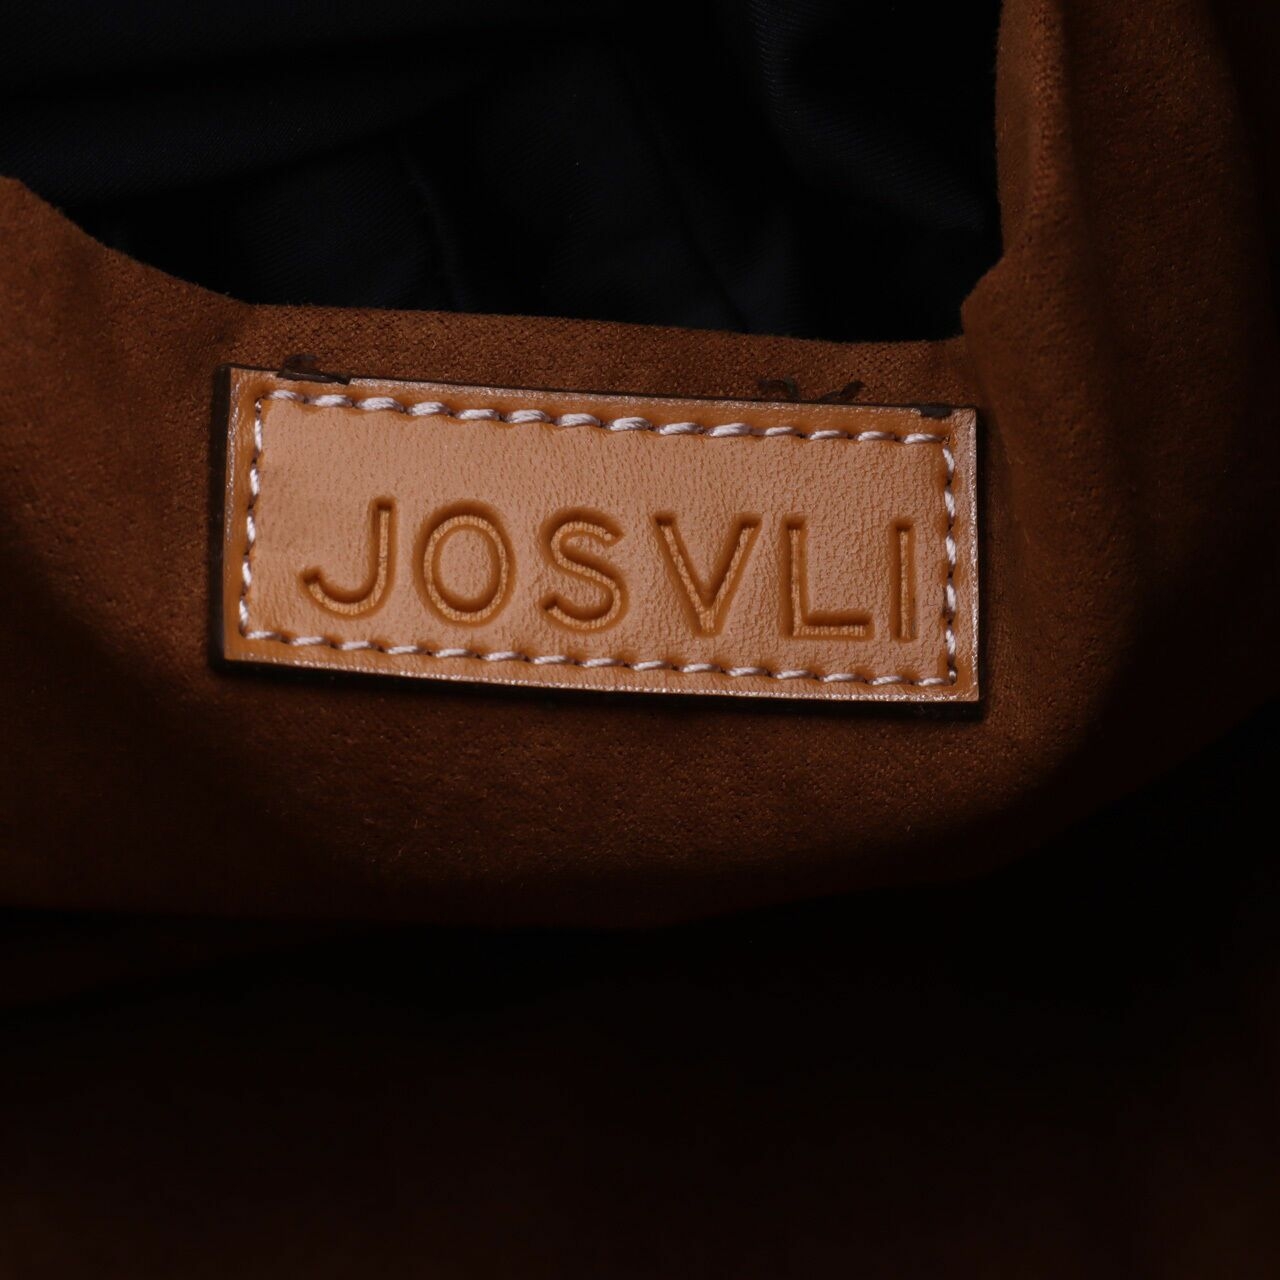 Josvli Brown Handbag